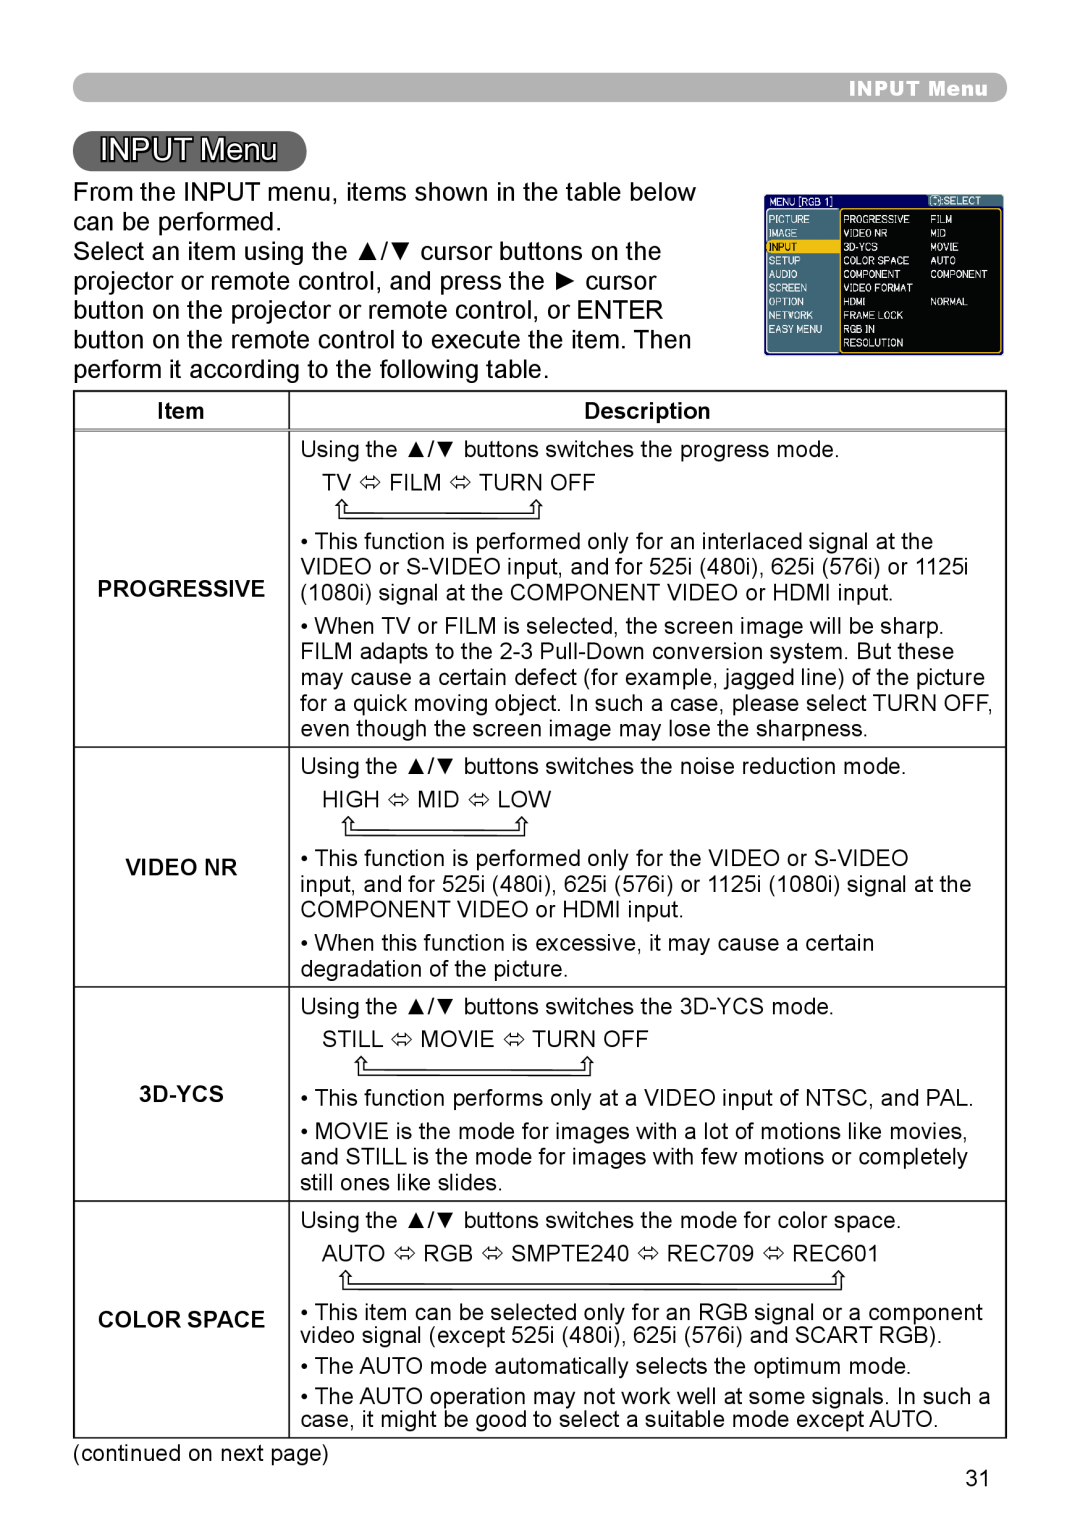 Planar PR9020 user manual INPUT Menu, Description 